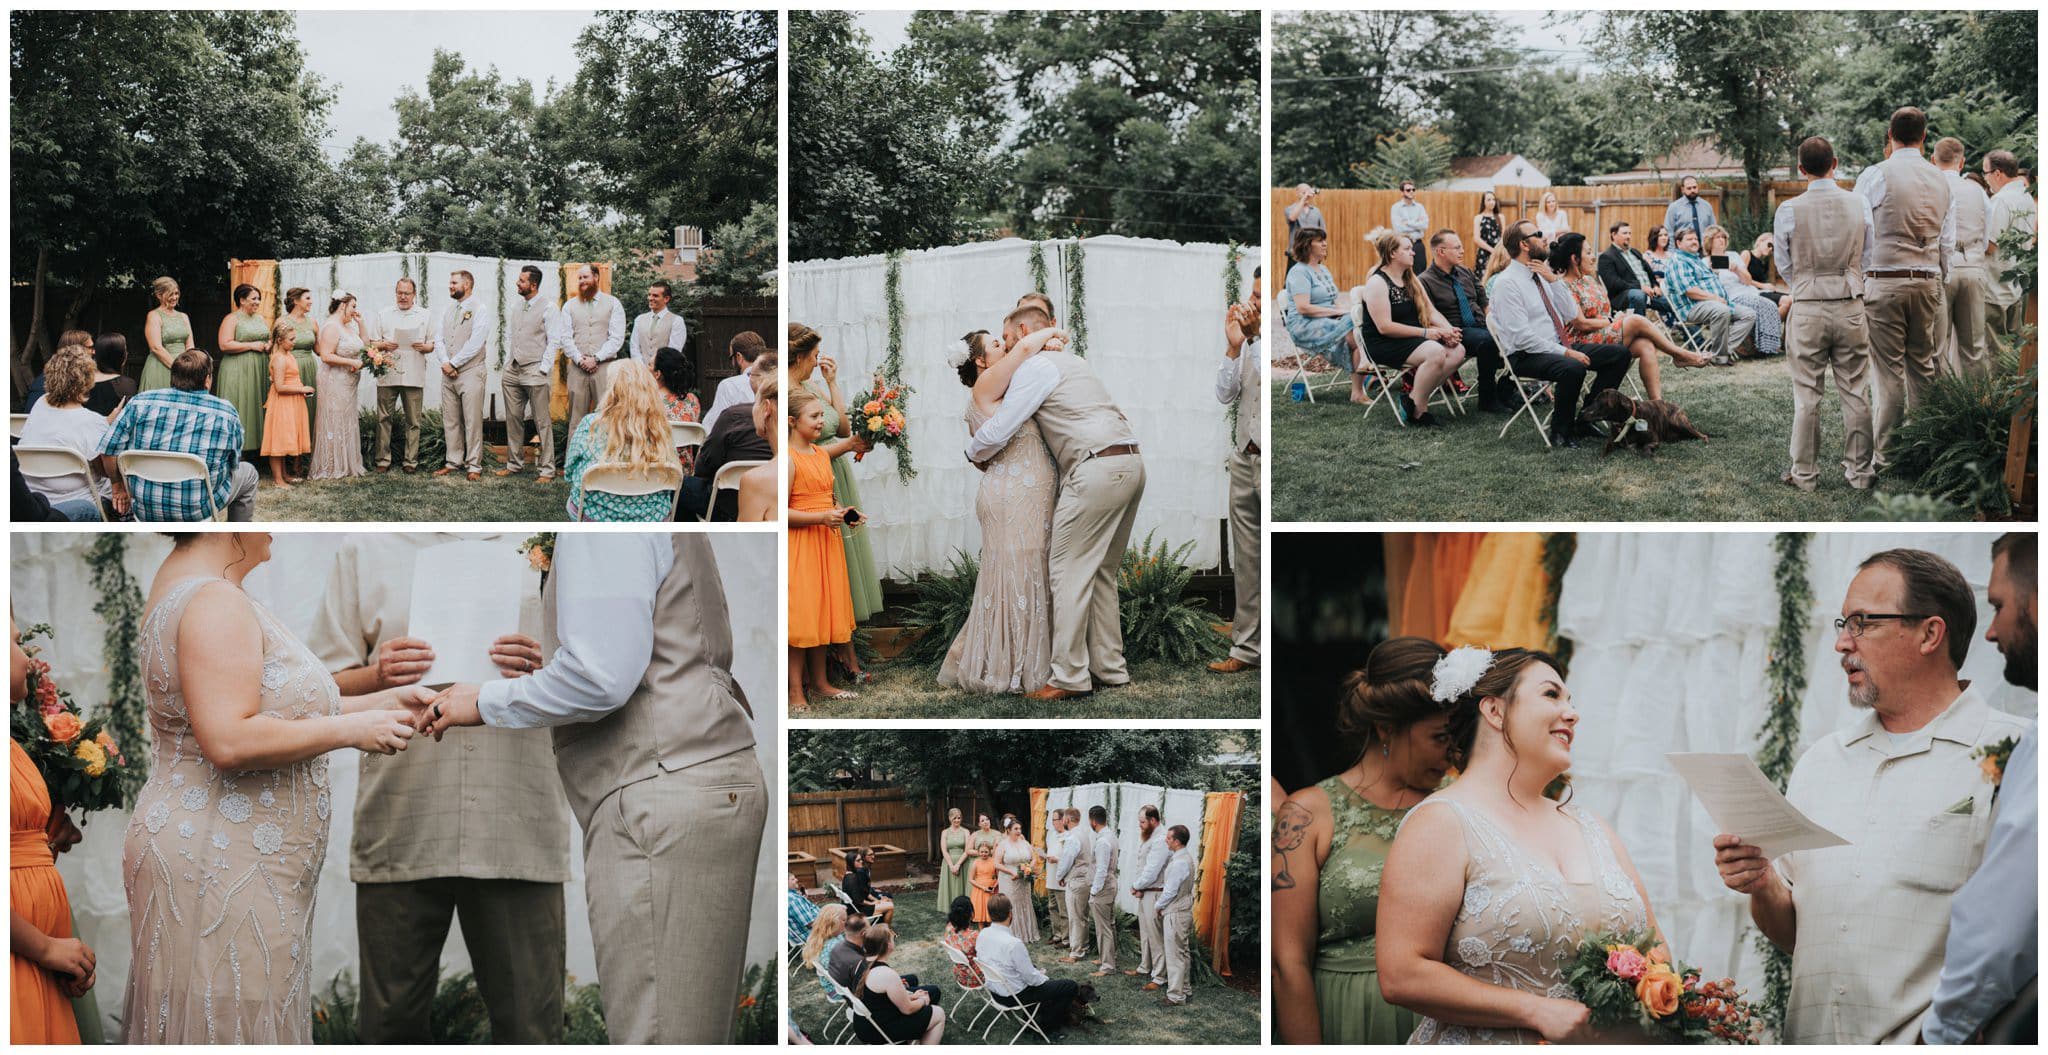 Great Divide Barrel Bar Wedding - Amanda + Dustin - Jill Houser Photography